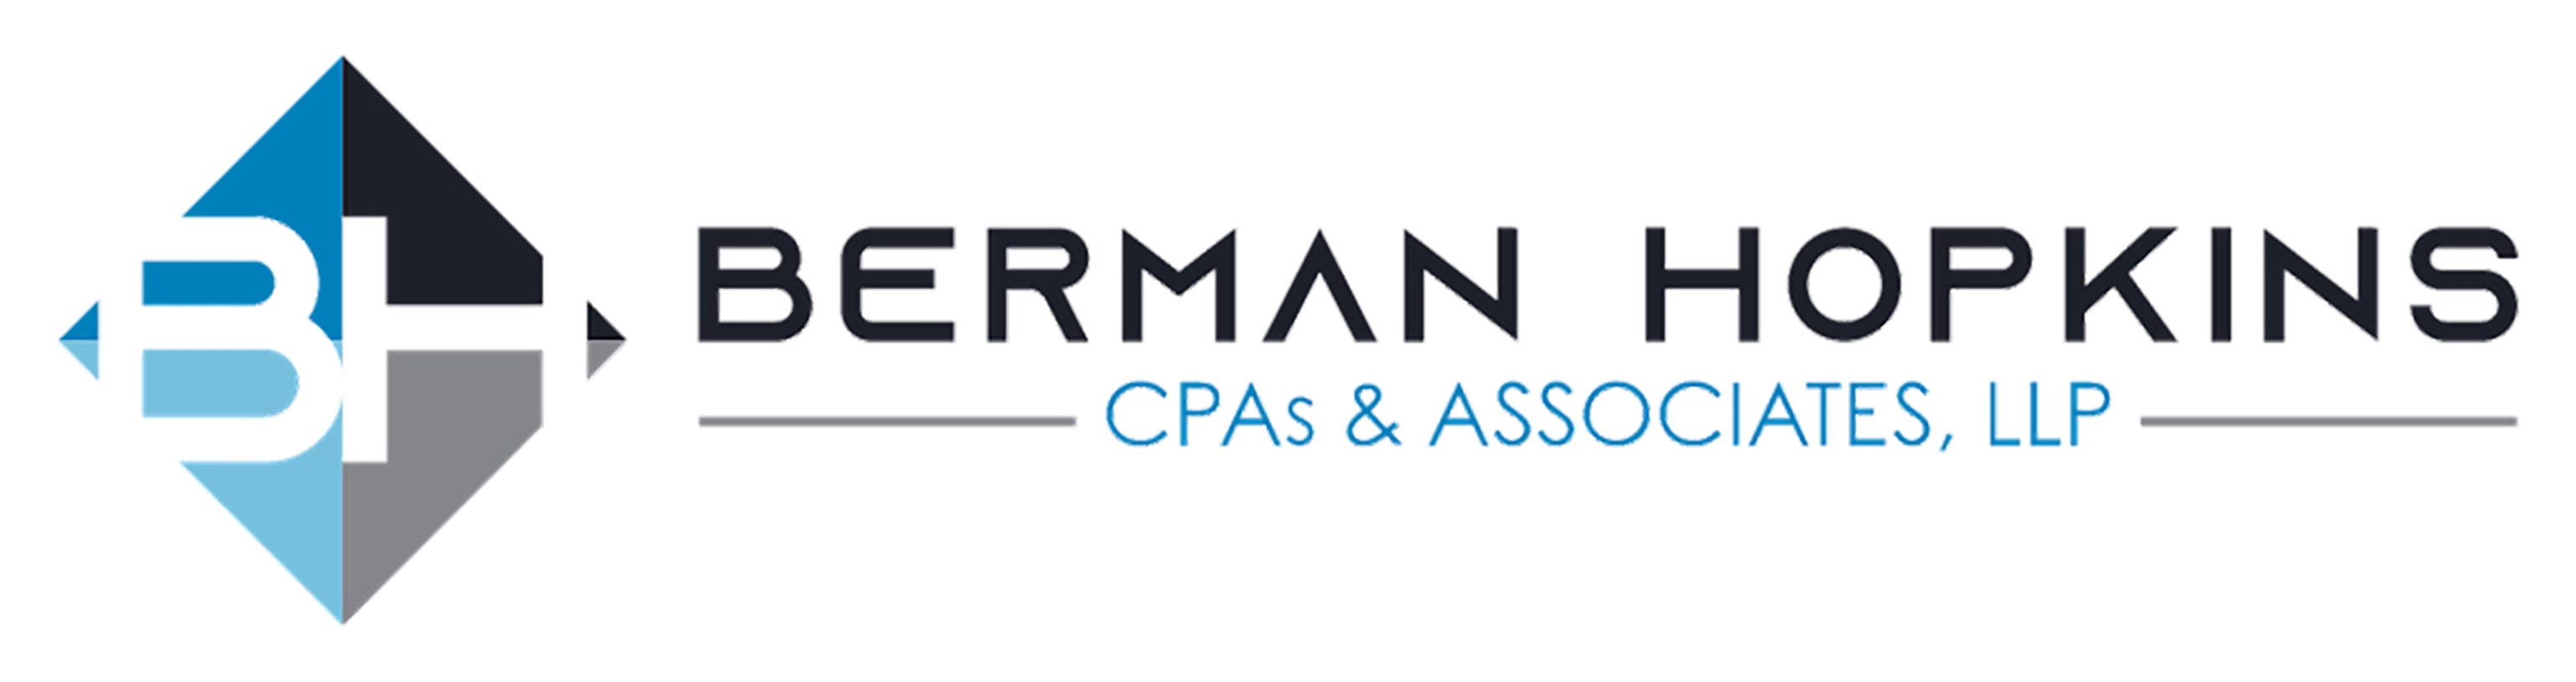 Berman Hopkins CPAs & Associates logo